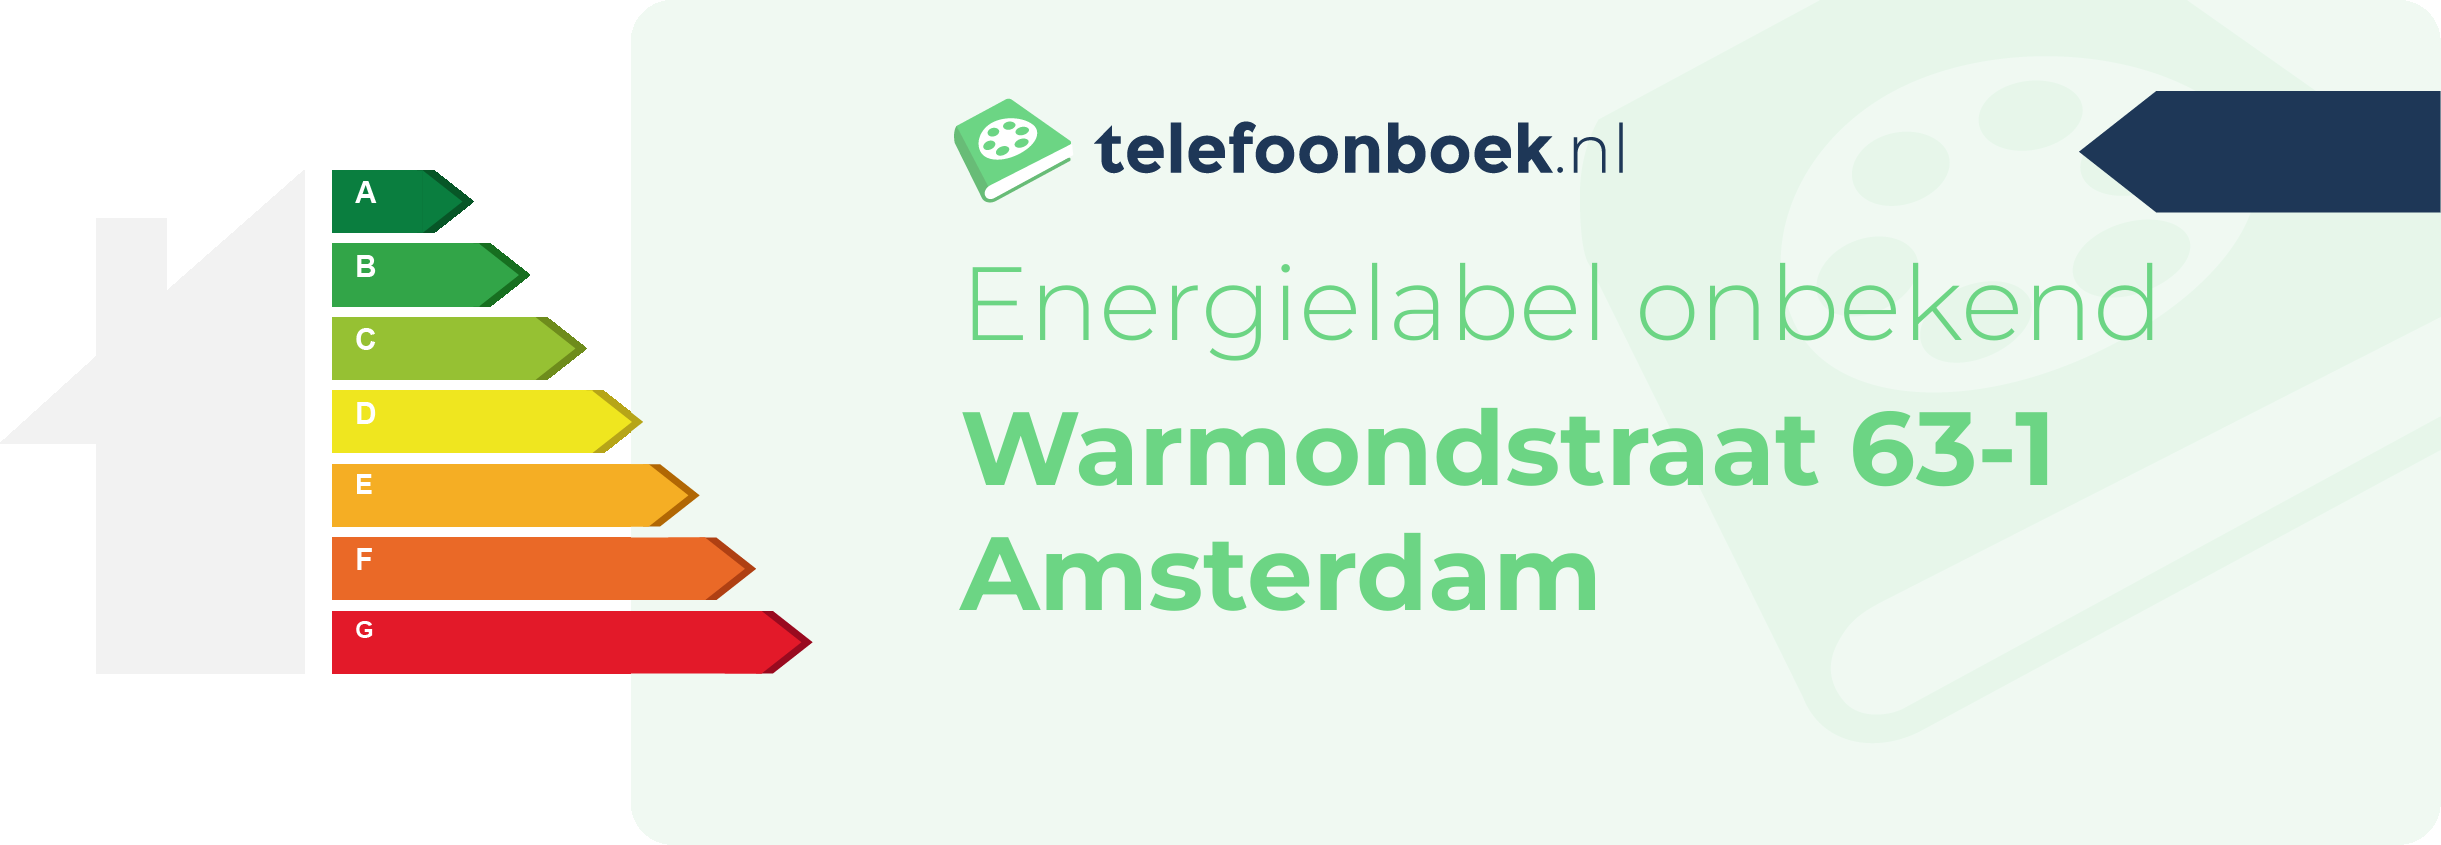 Energielabel Warmondstraat 63-1 Amsterdam